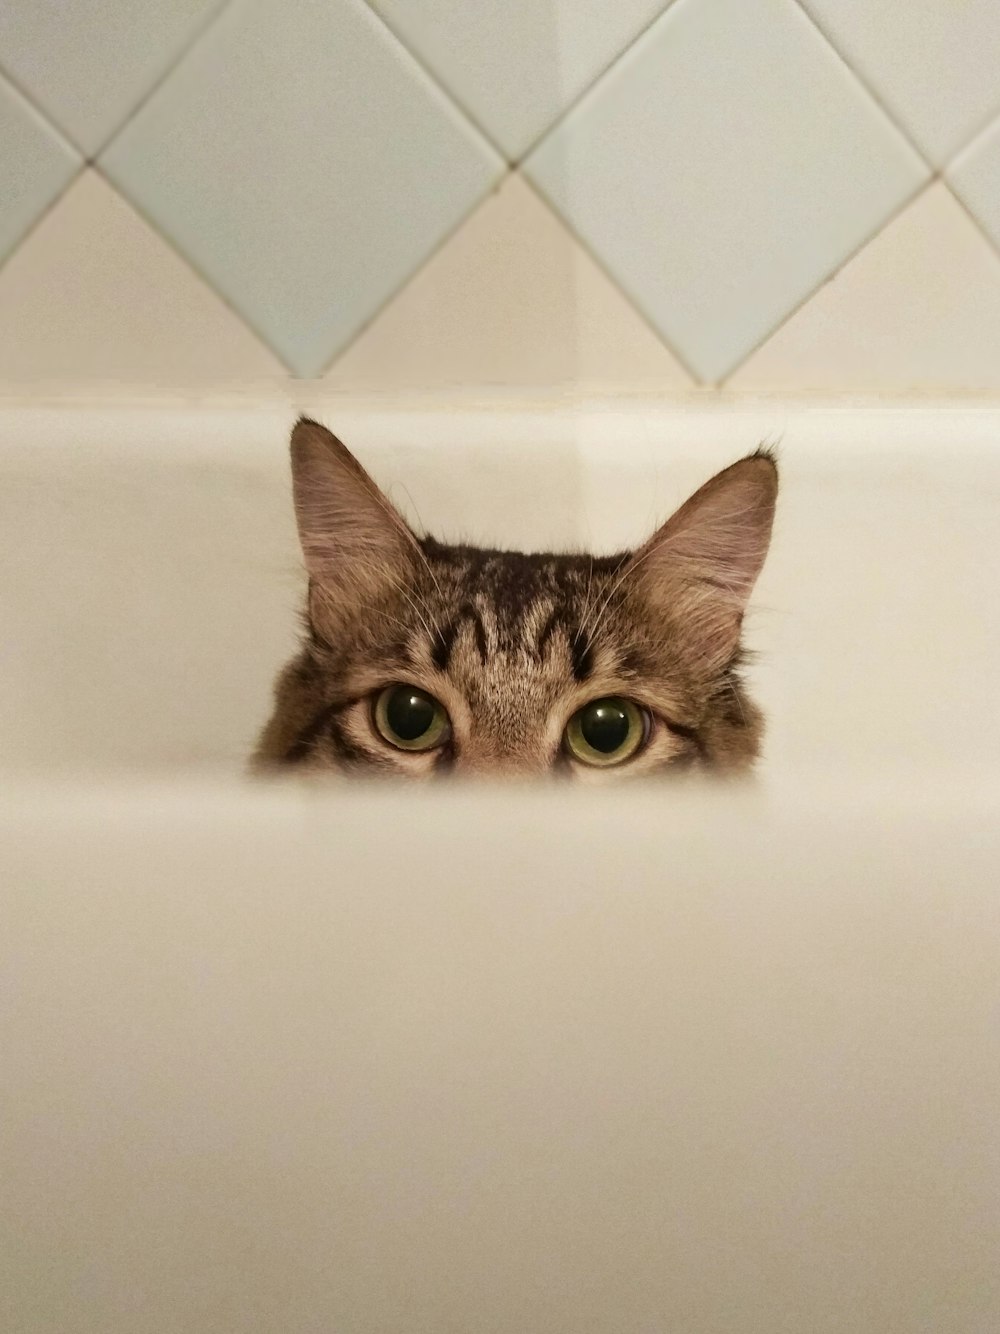 a cat in a bathtub